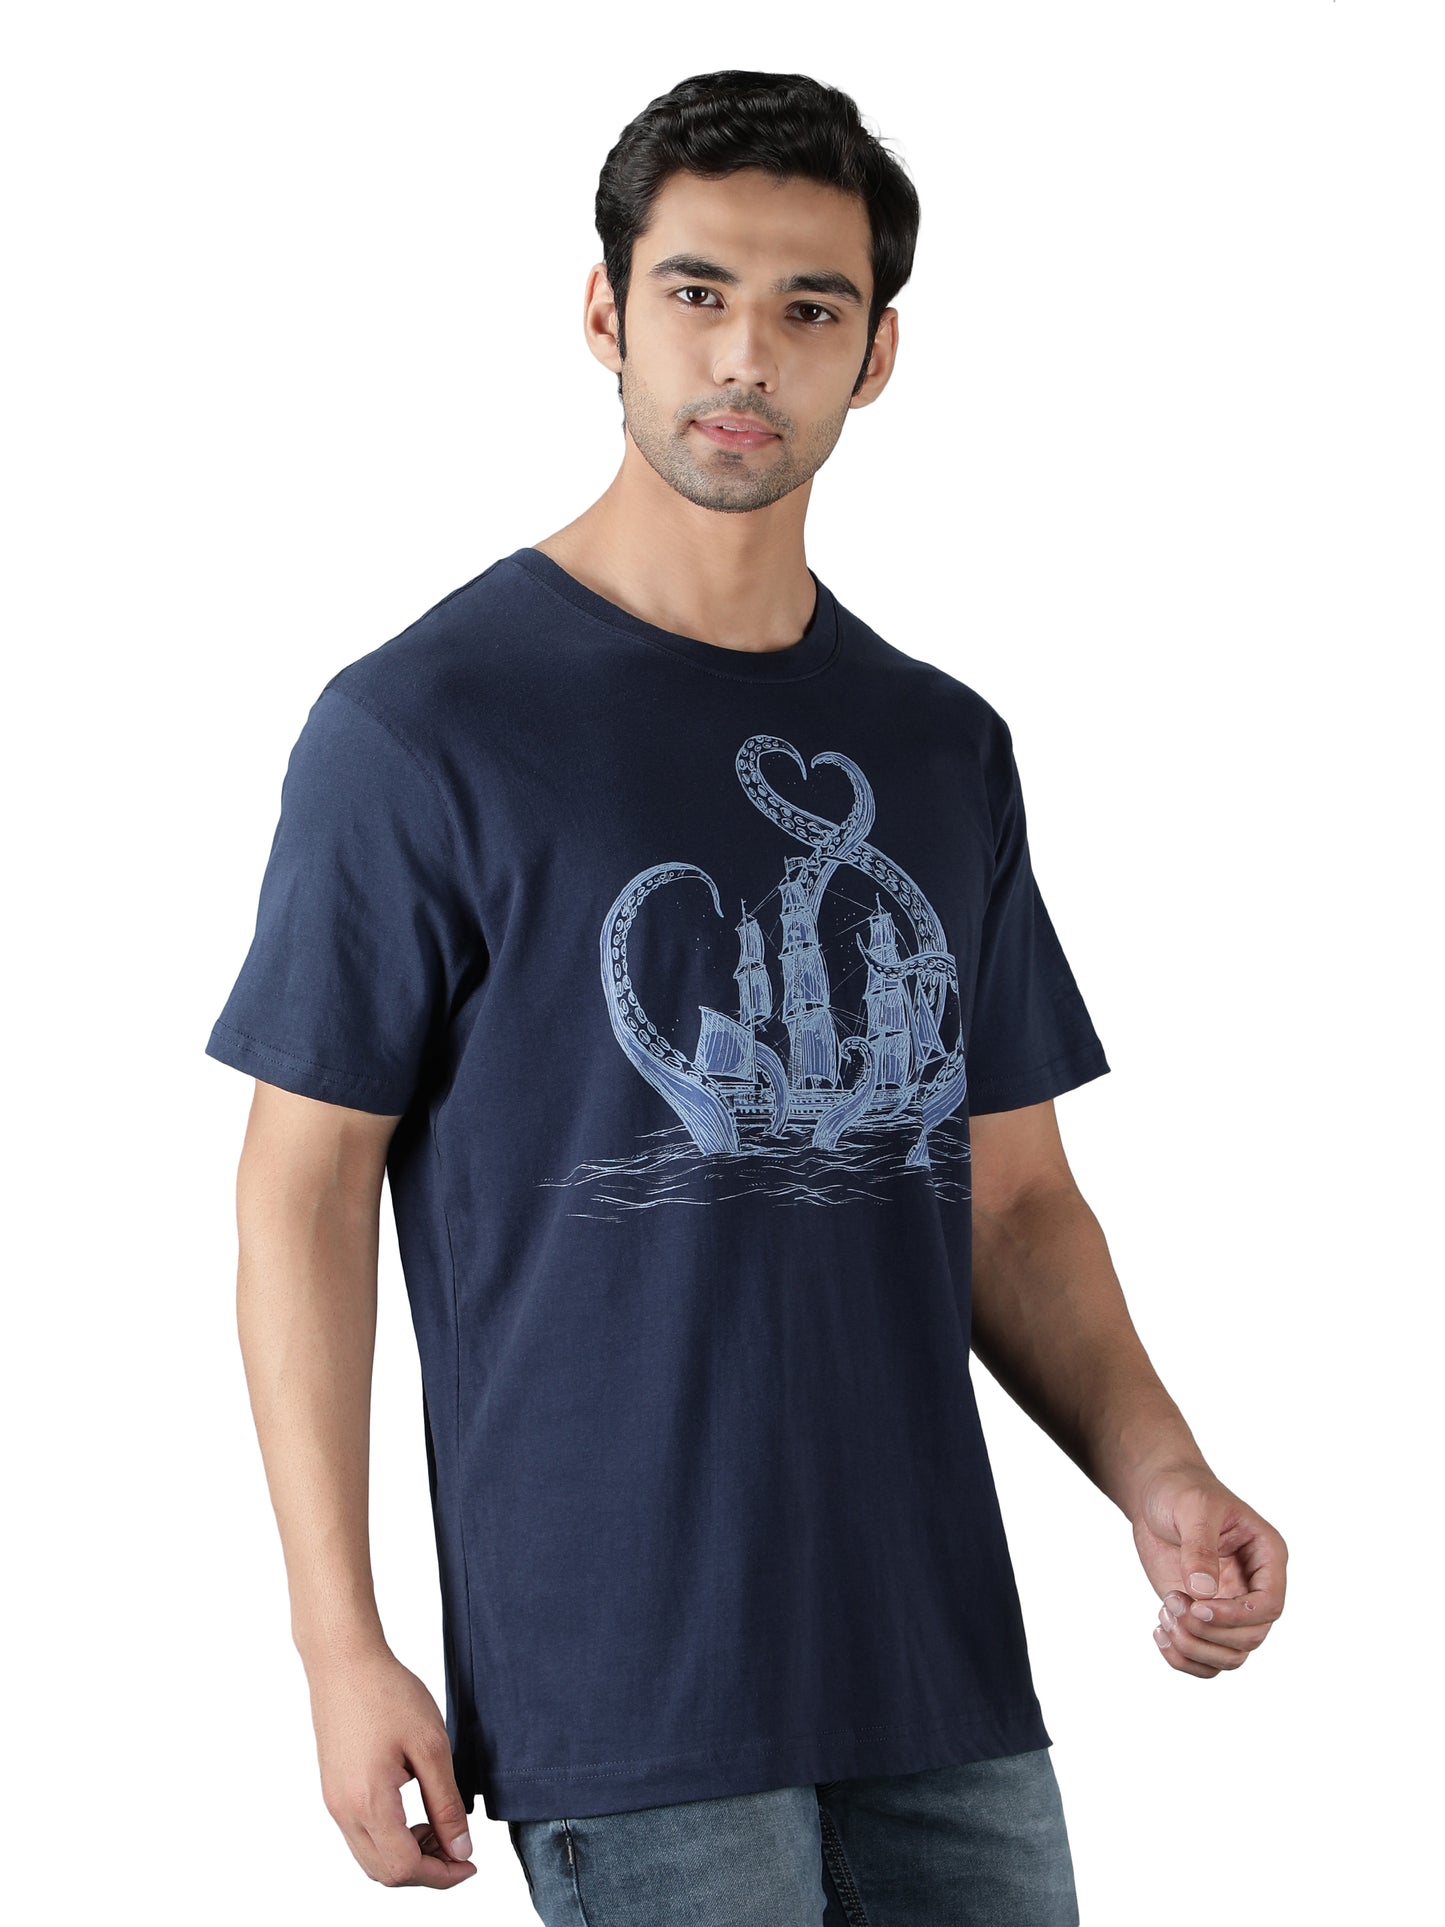 NUEVOSPORTA Men's Cotton Ship Printed Navy Blue T-Shirt